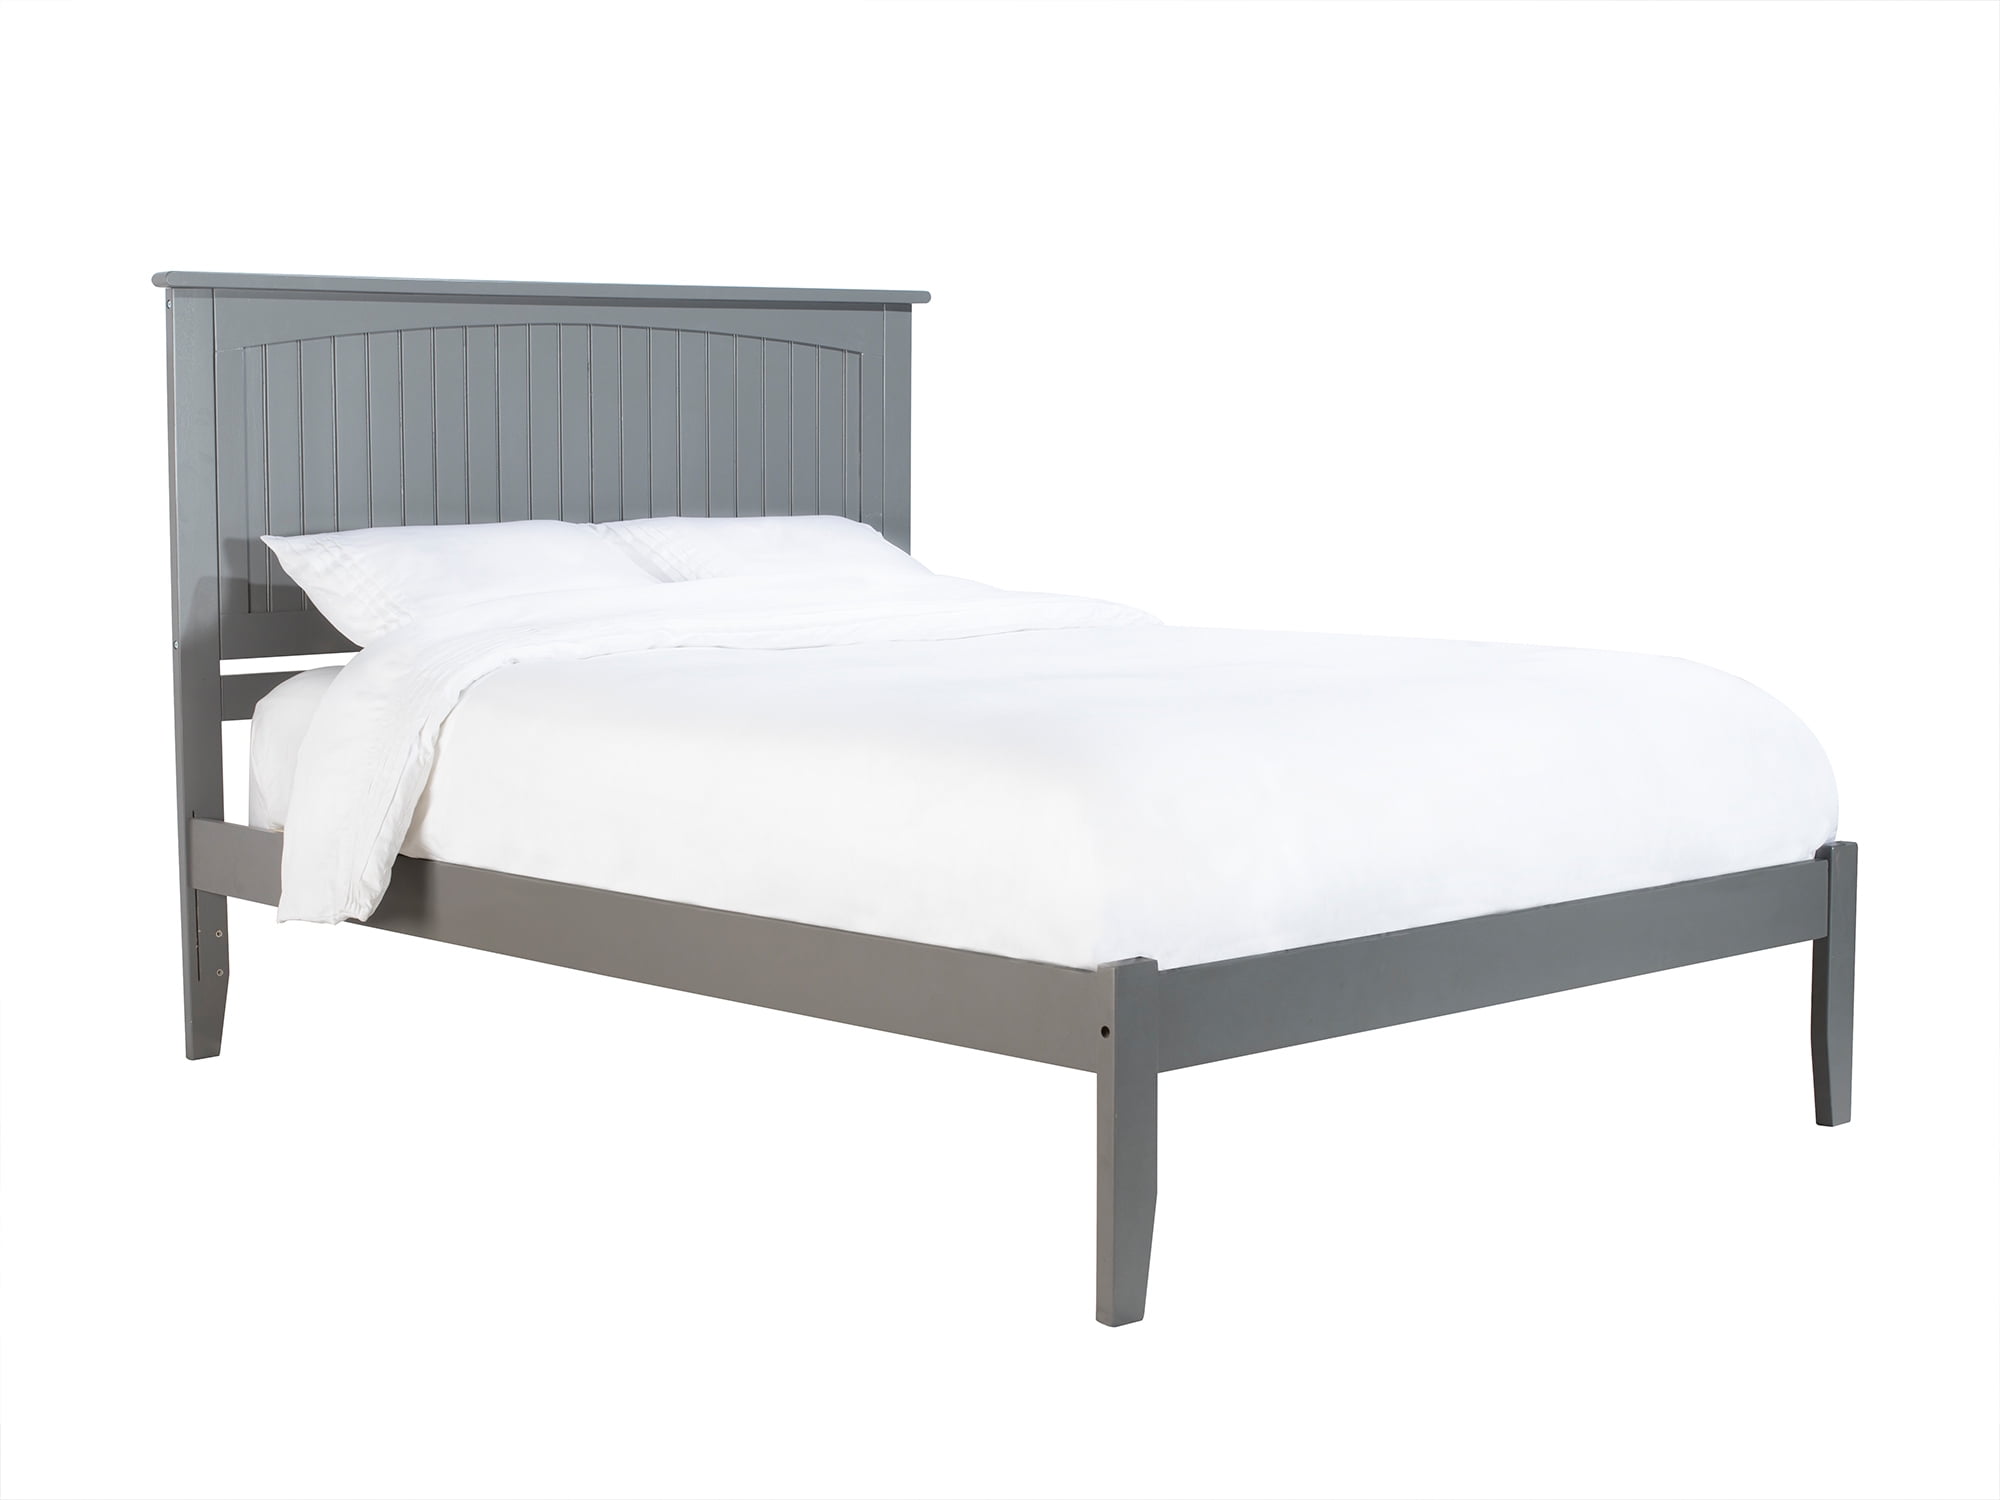 Picture of Atlantic Furniture AR8241009 Nantucket Queen Platform Bed with Open Foot Board - Grey